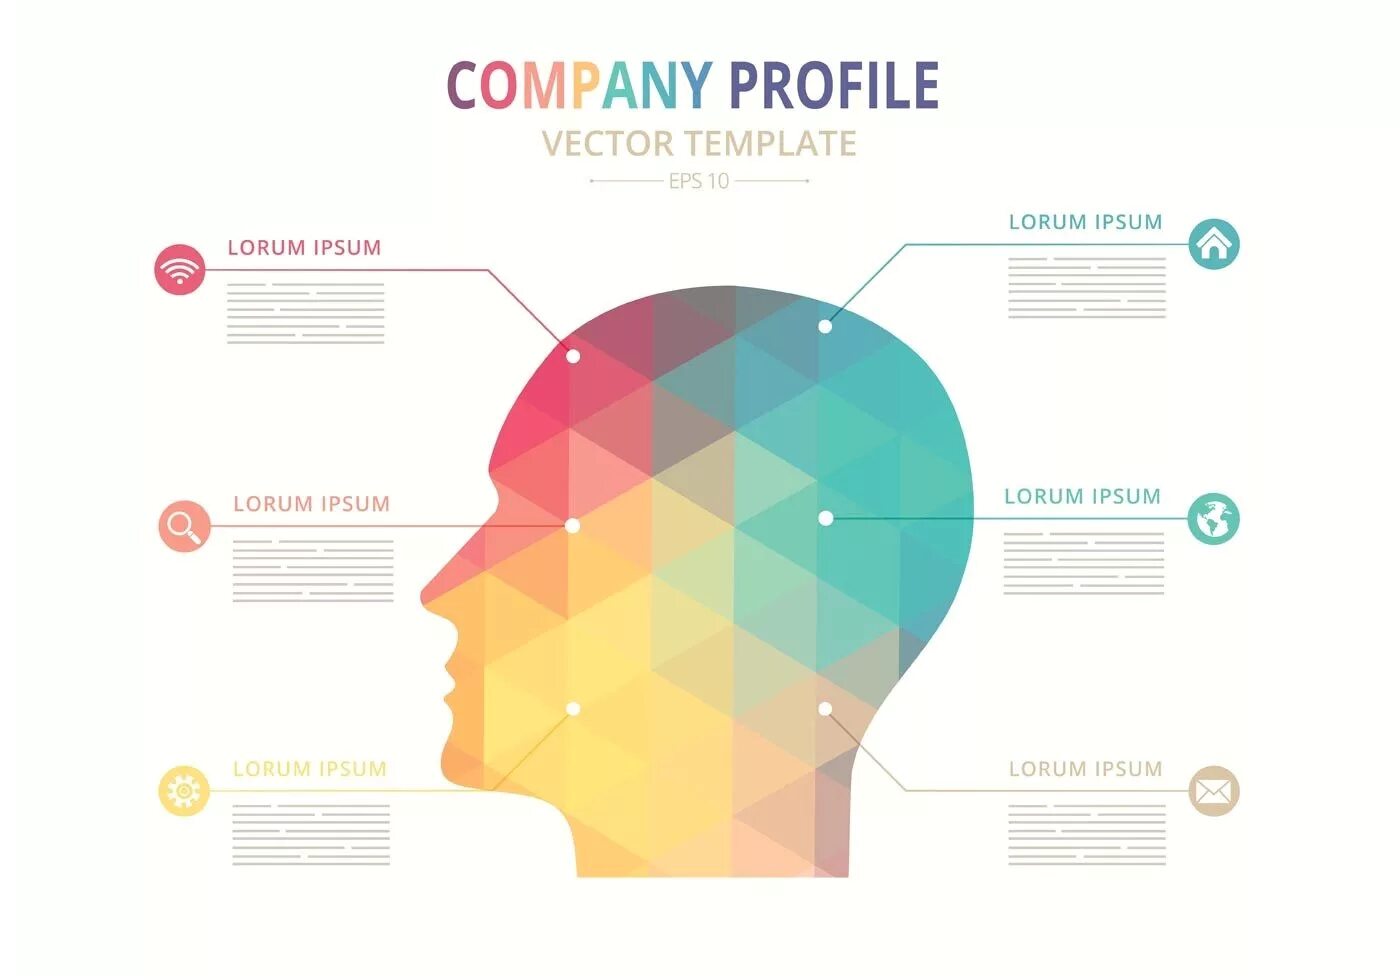 Profile компания. Профайл компании пример. Company profile Template. Профиль компании образец. Details profile